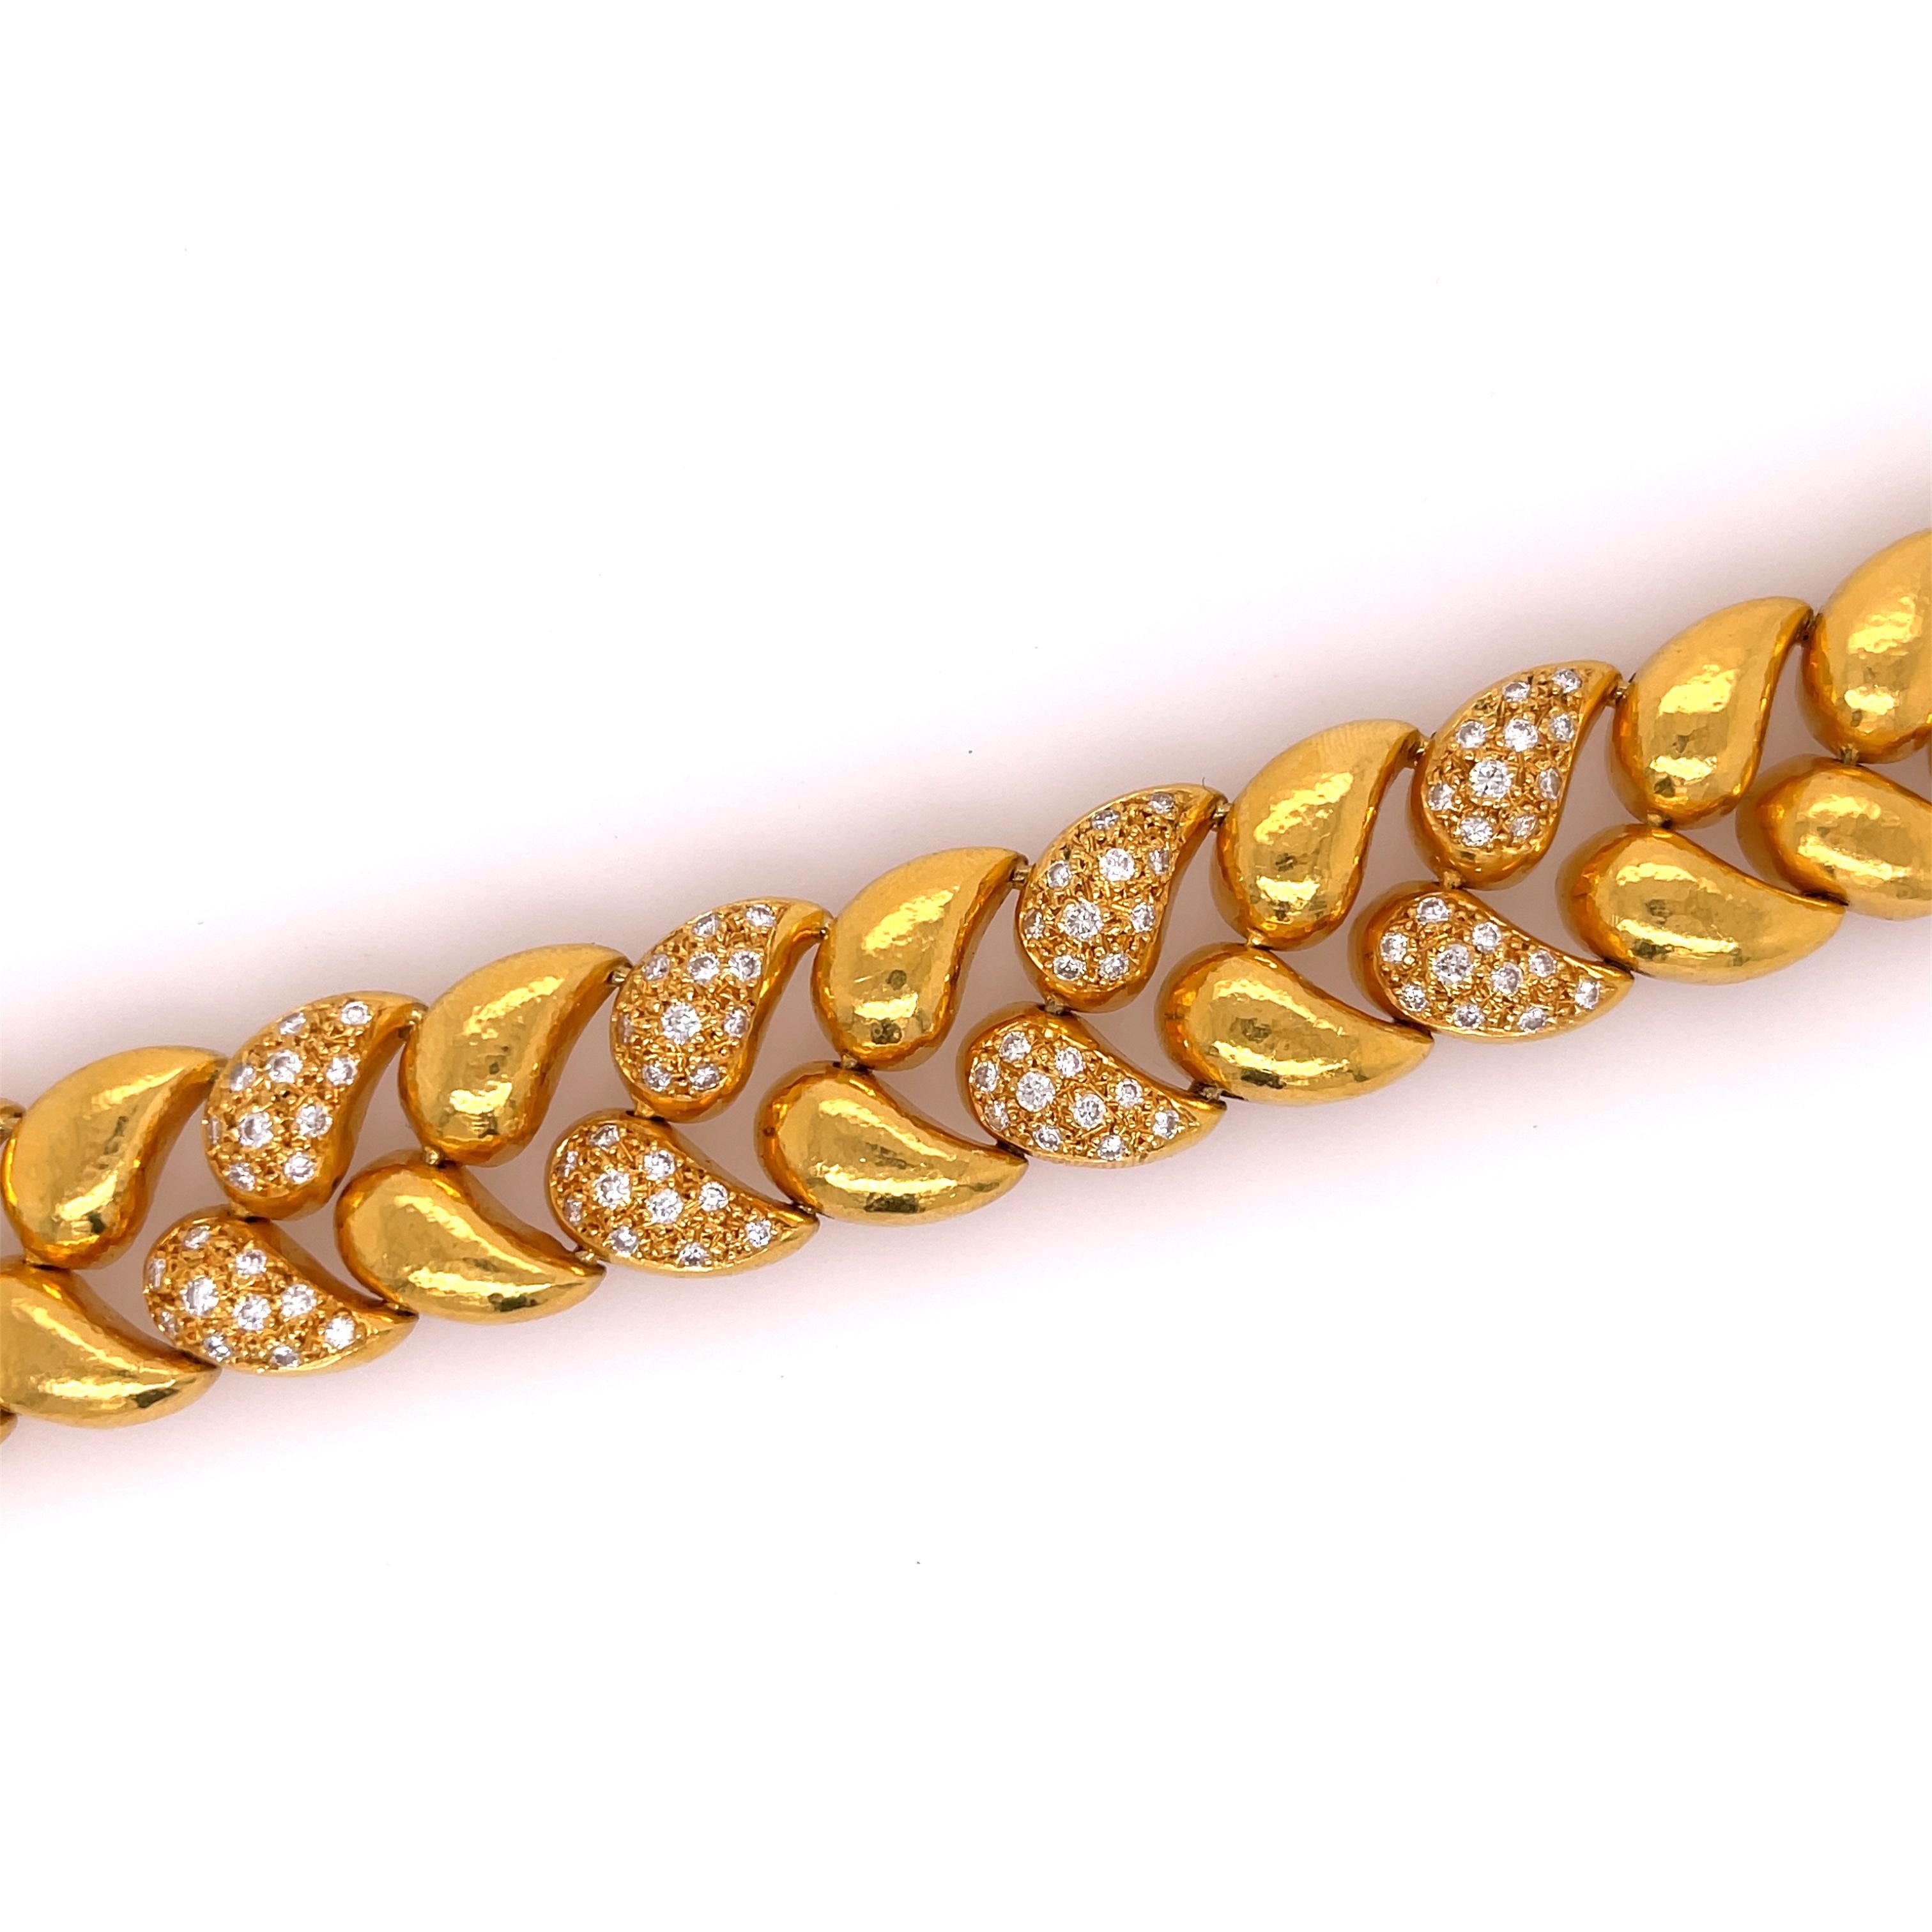 Zolotas diamond bracelet in 22K yellow gold. The bracelet features 80 pave set brilliant cut round diamonds. Stamped 22k Zolotas. 